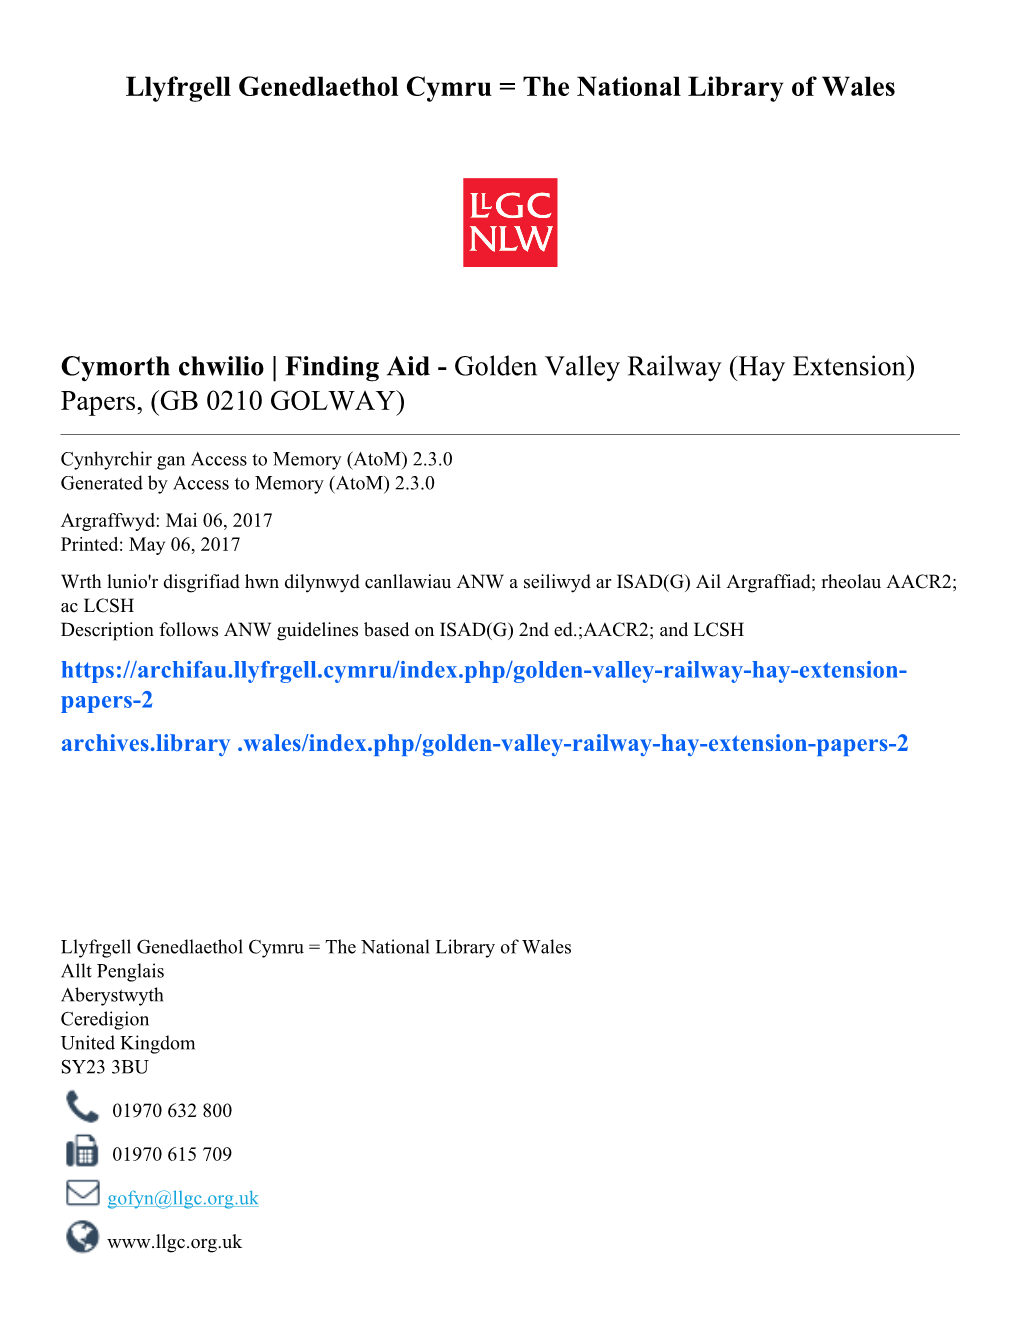 Golden Valley Railway (Hay Extension) Papers, (GB 0210 GOLWAY)